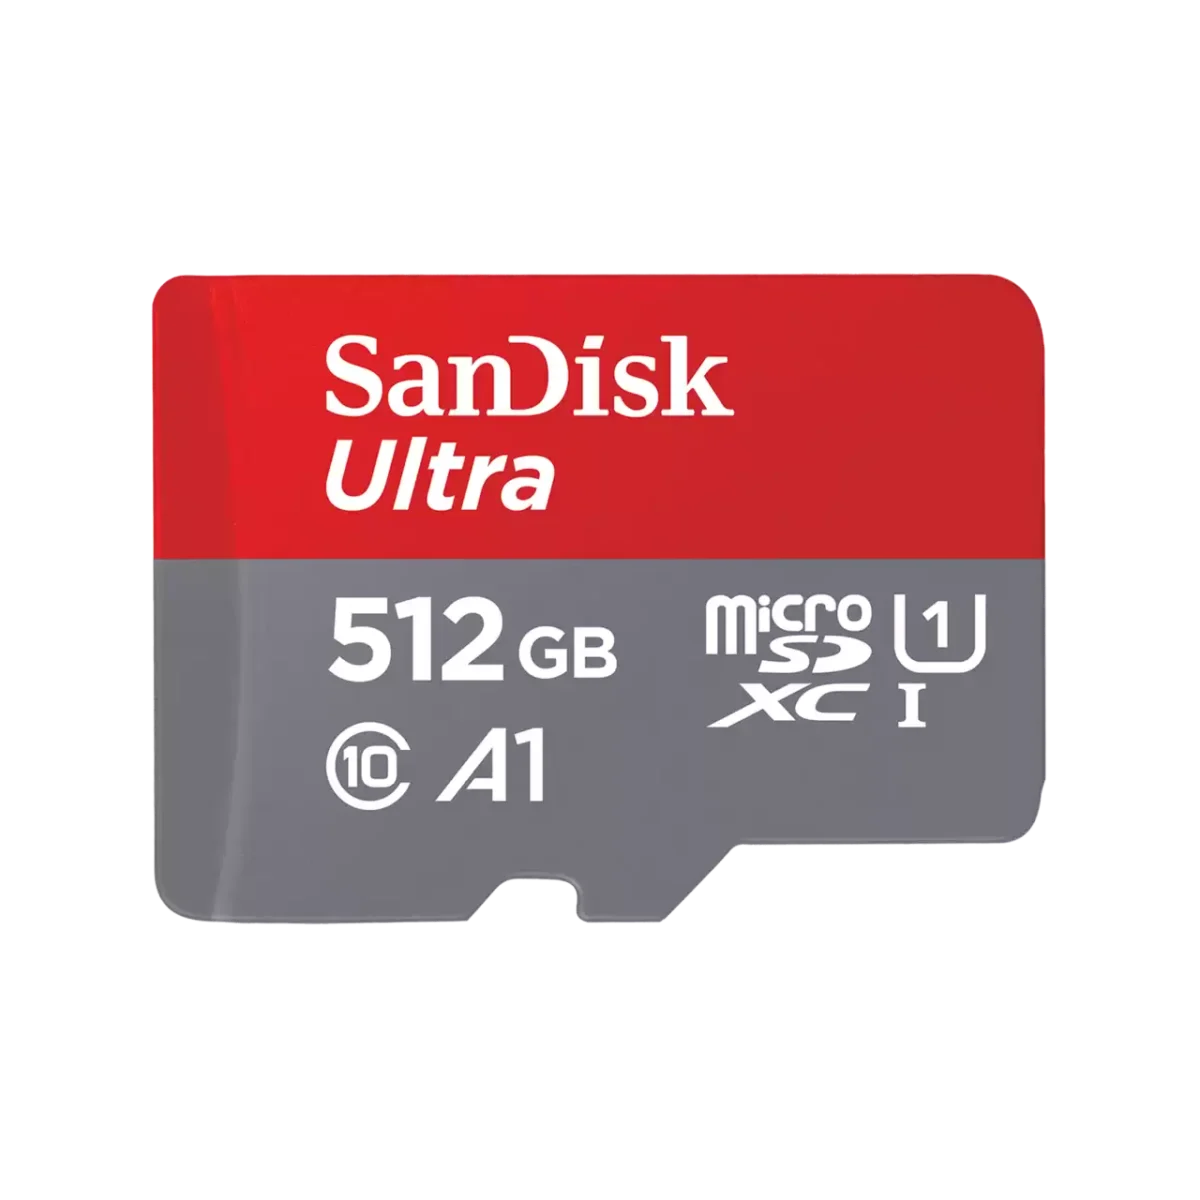 SanDisk Ultra microSDHC™ UHS-I card